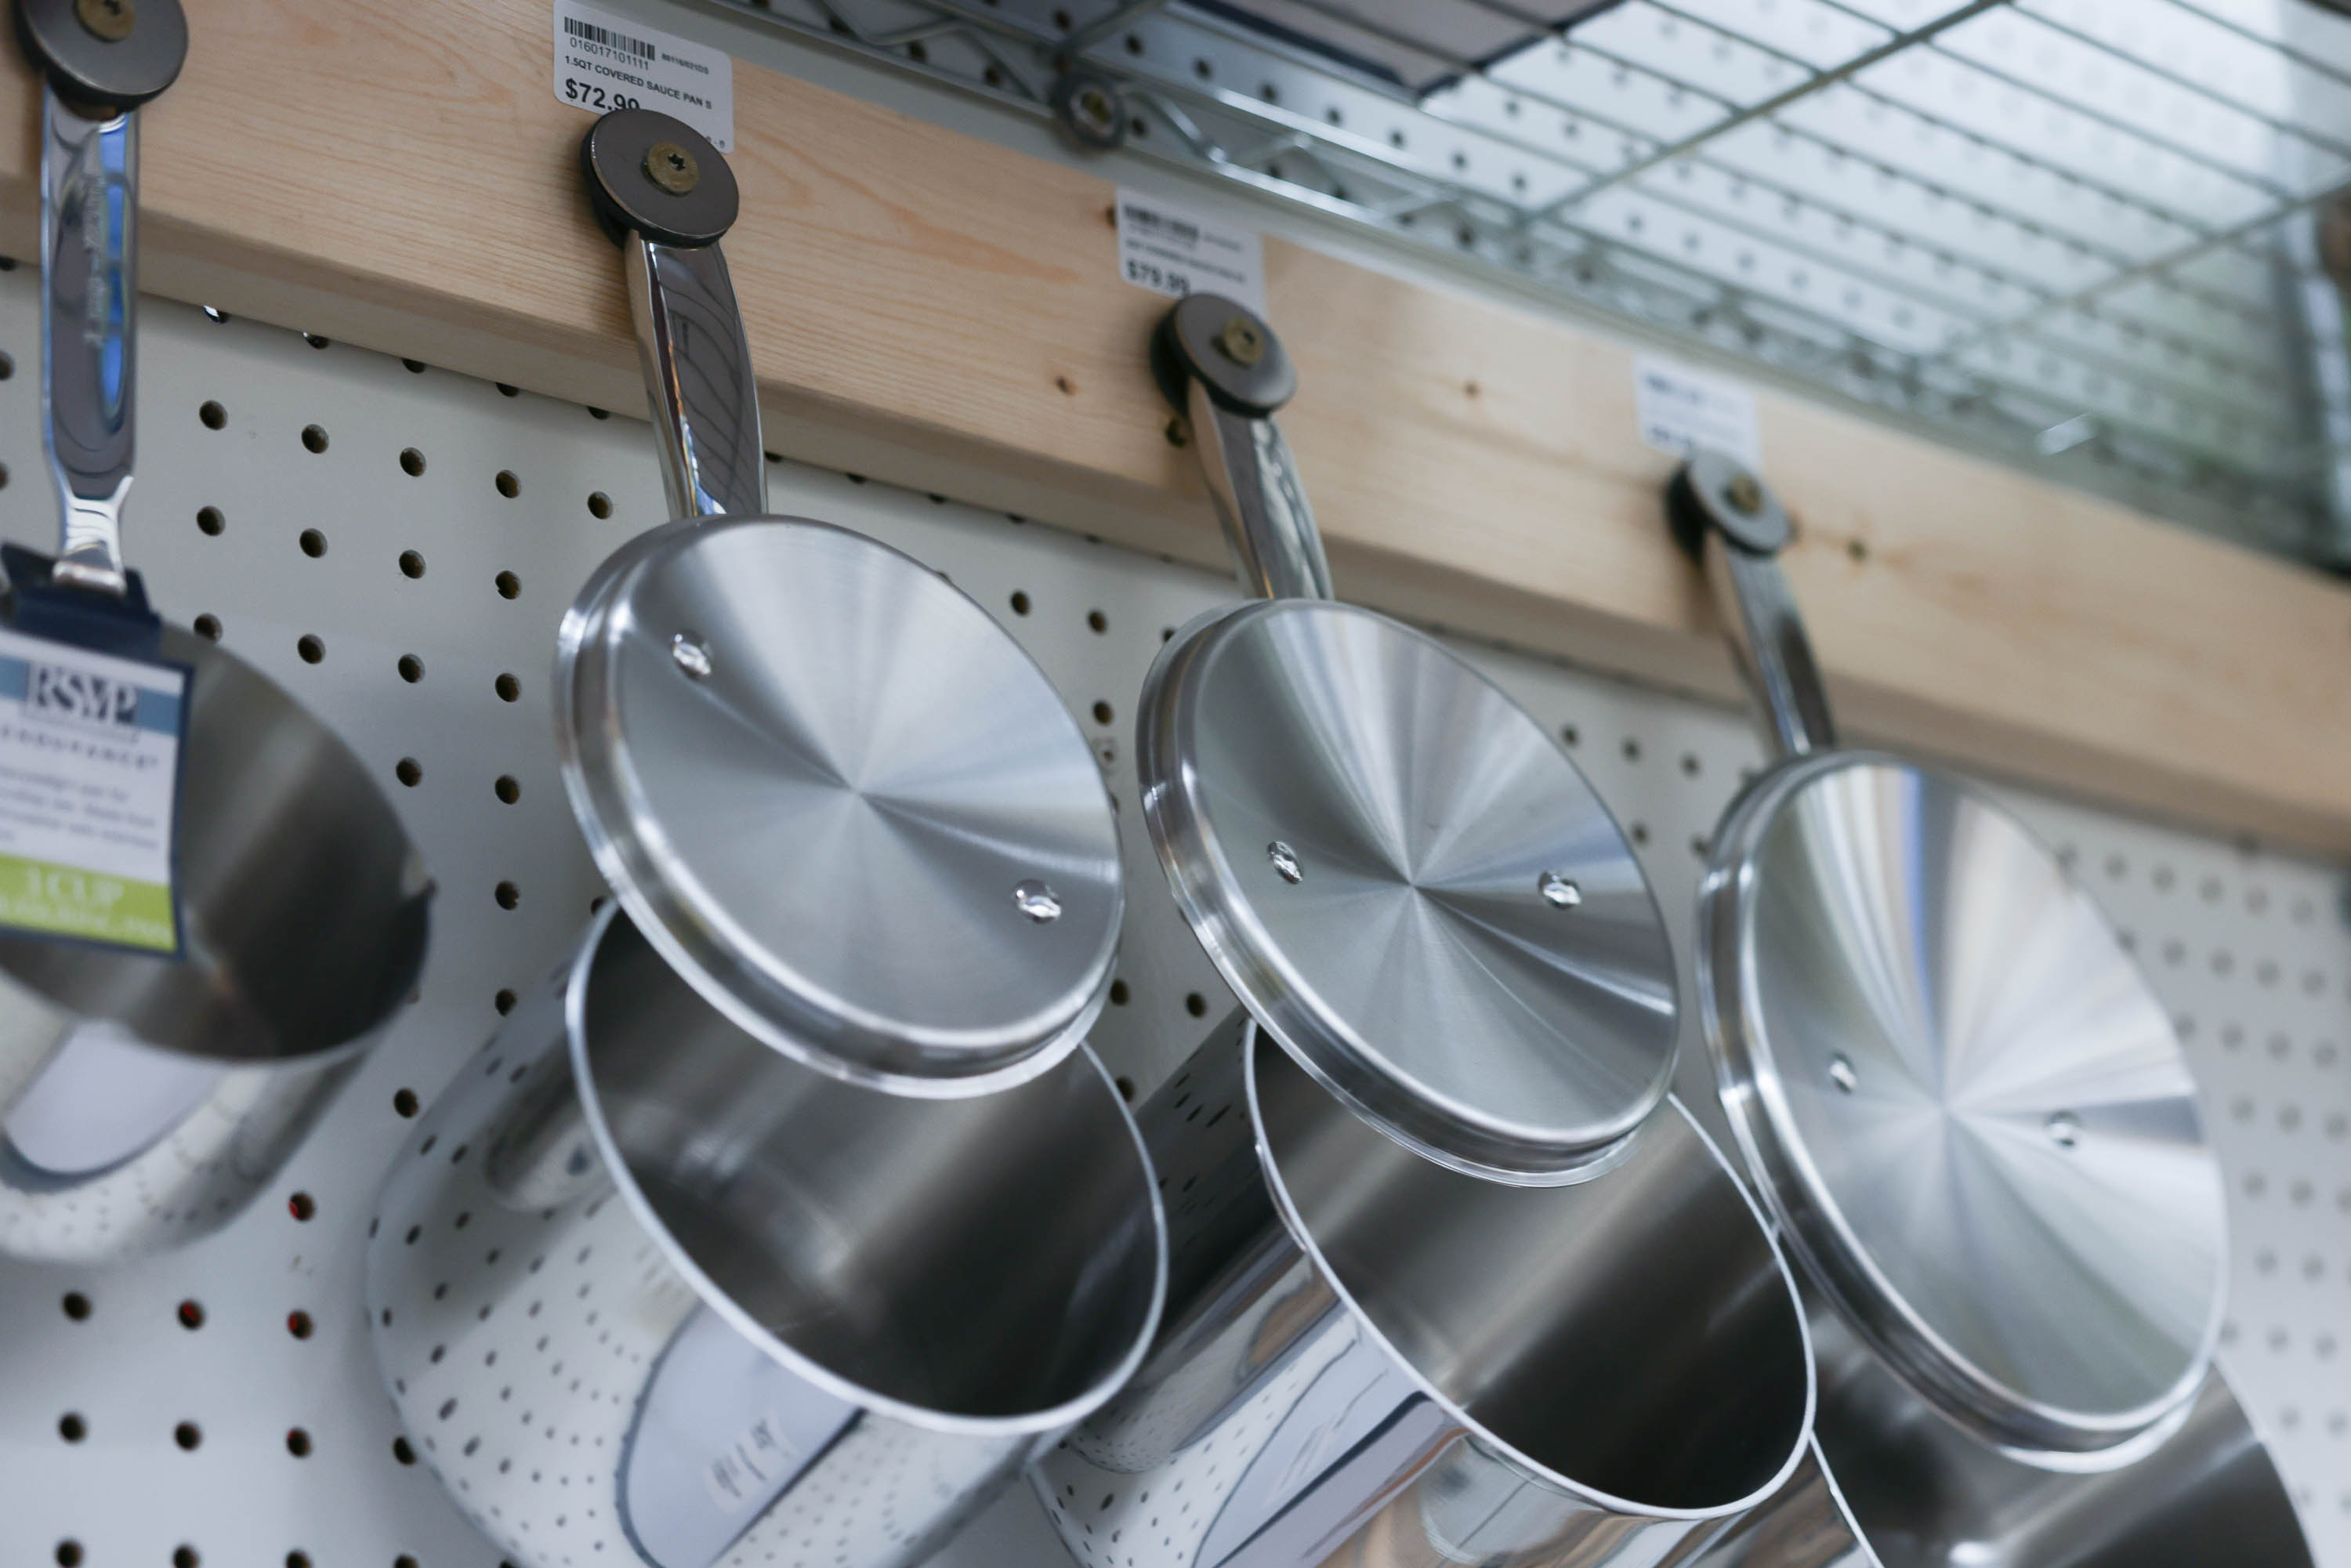 Three pans hang below a metal shelf